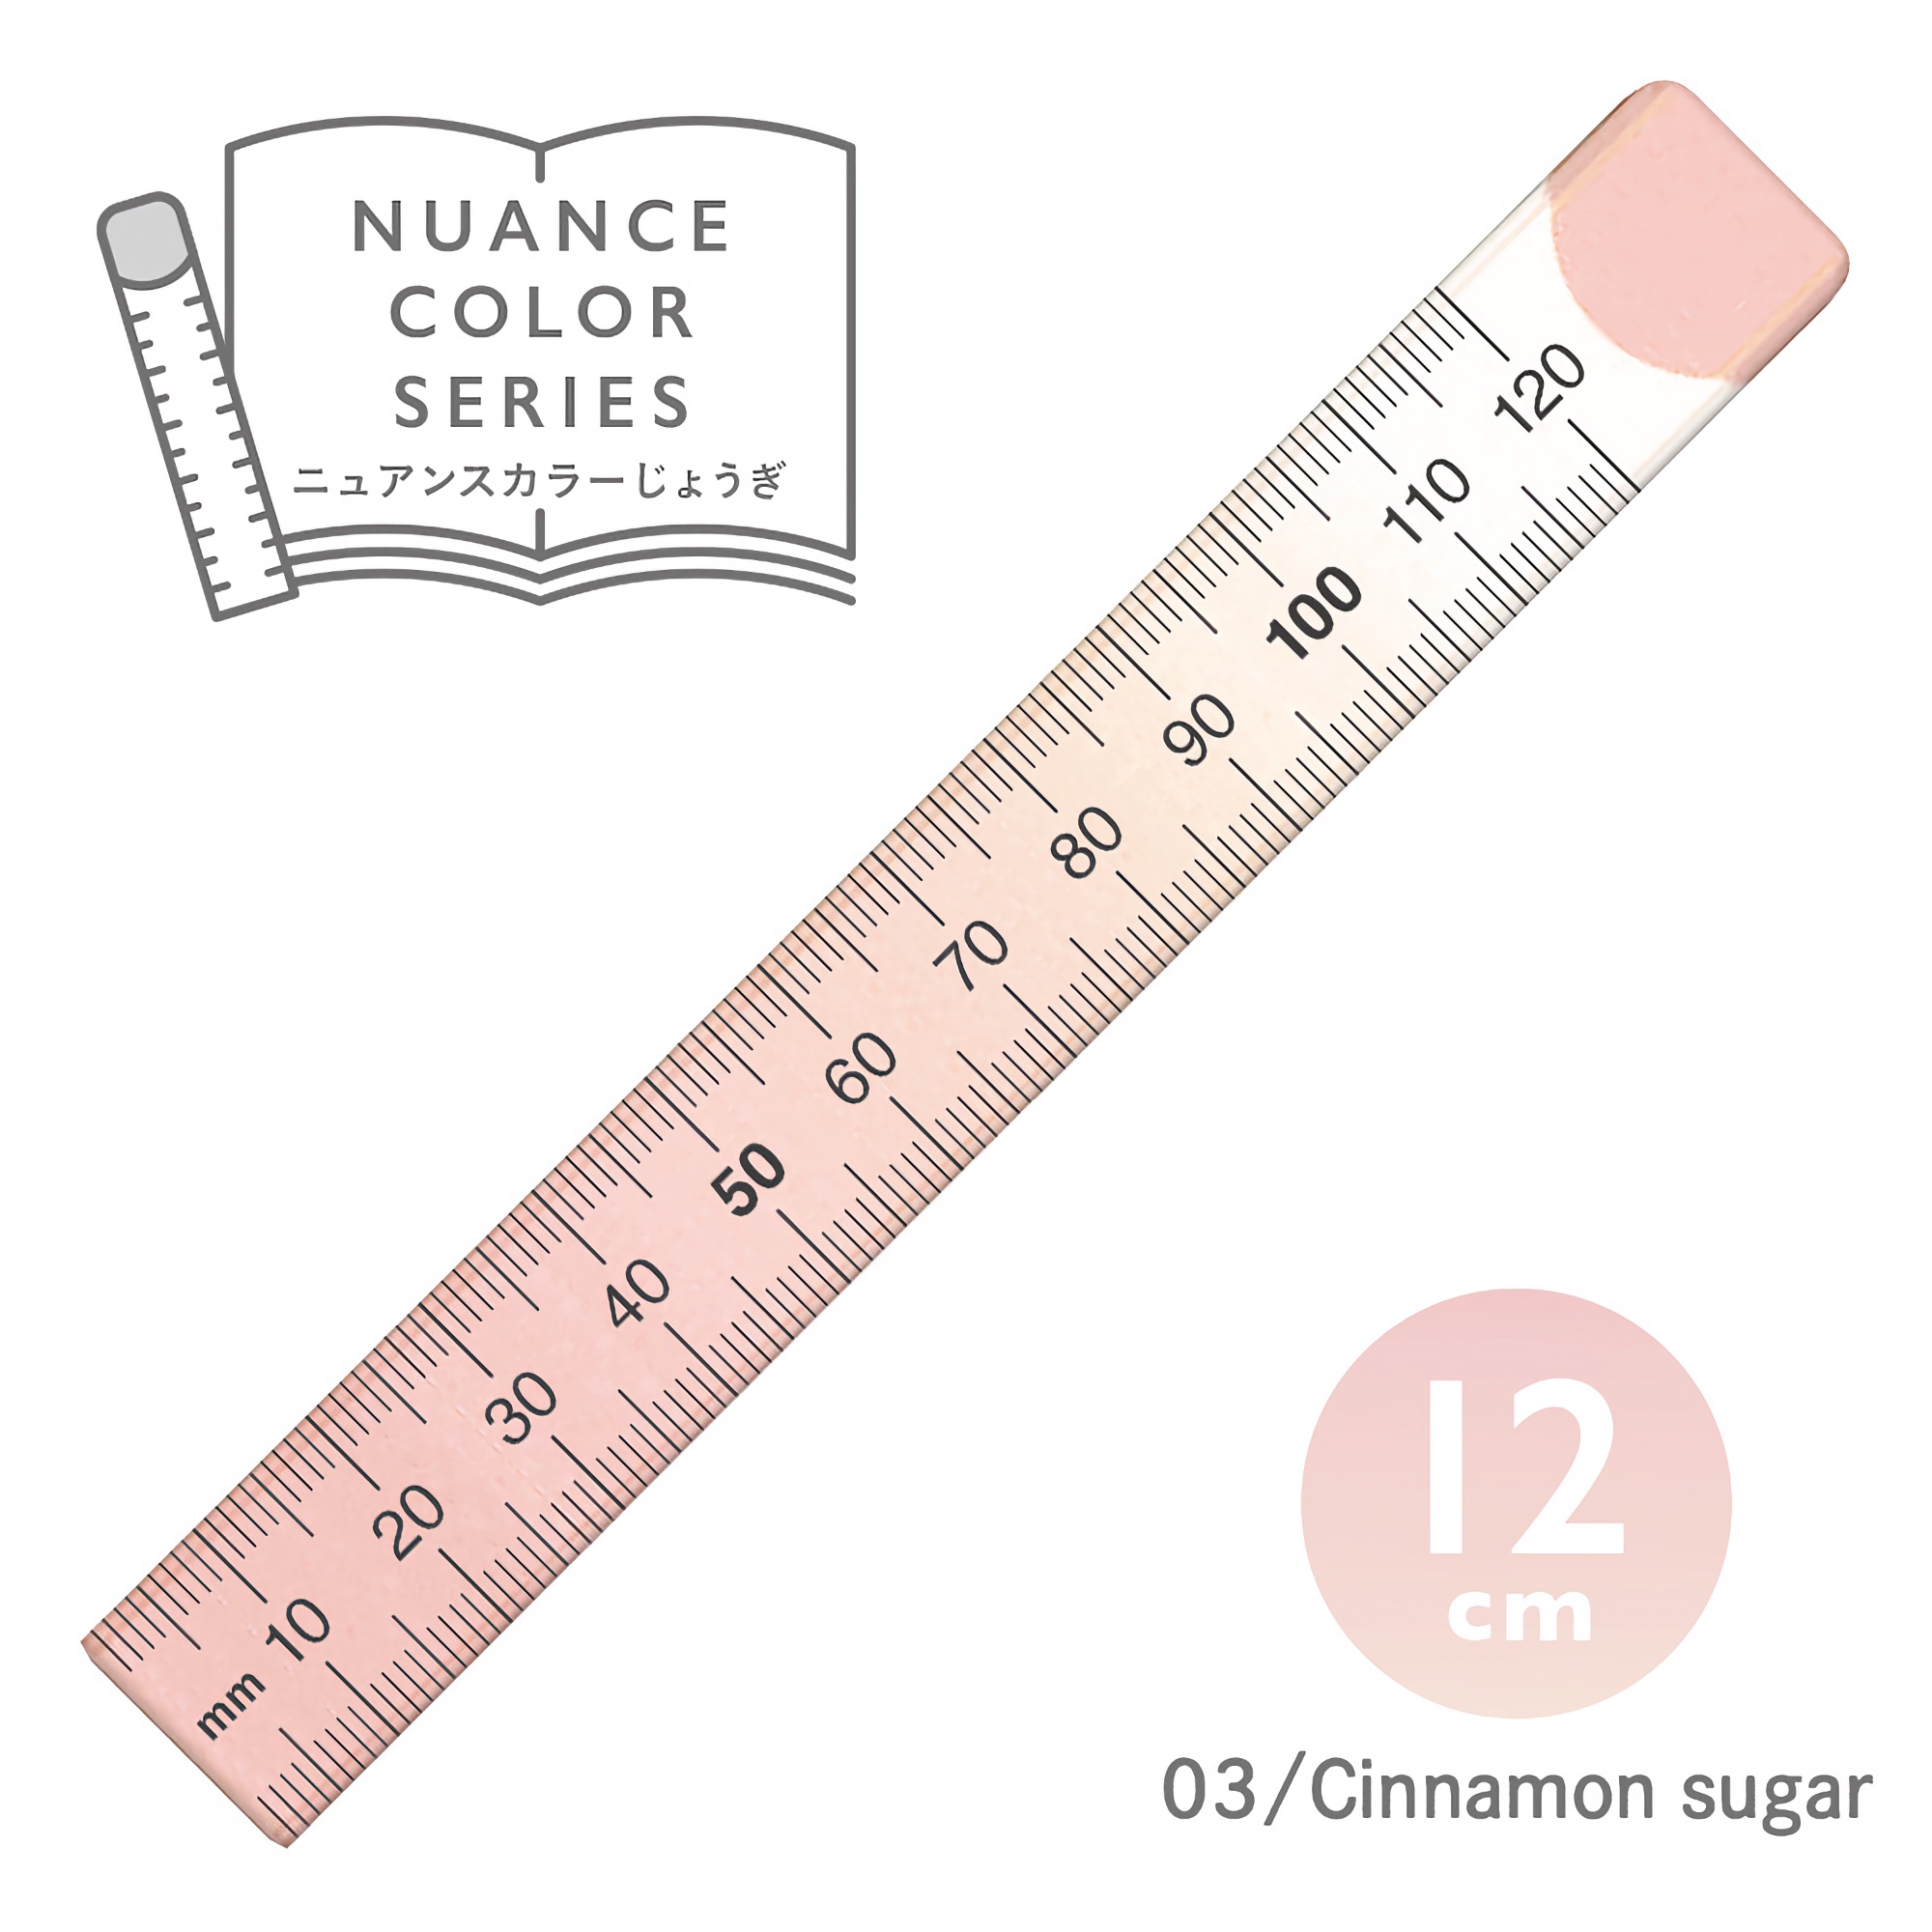 Kyoei Orions Nuance Color Ruler 12 cm Cinnamon Sugar